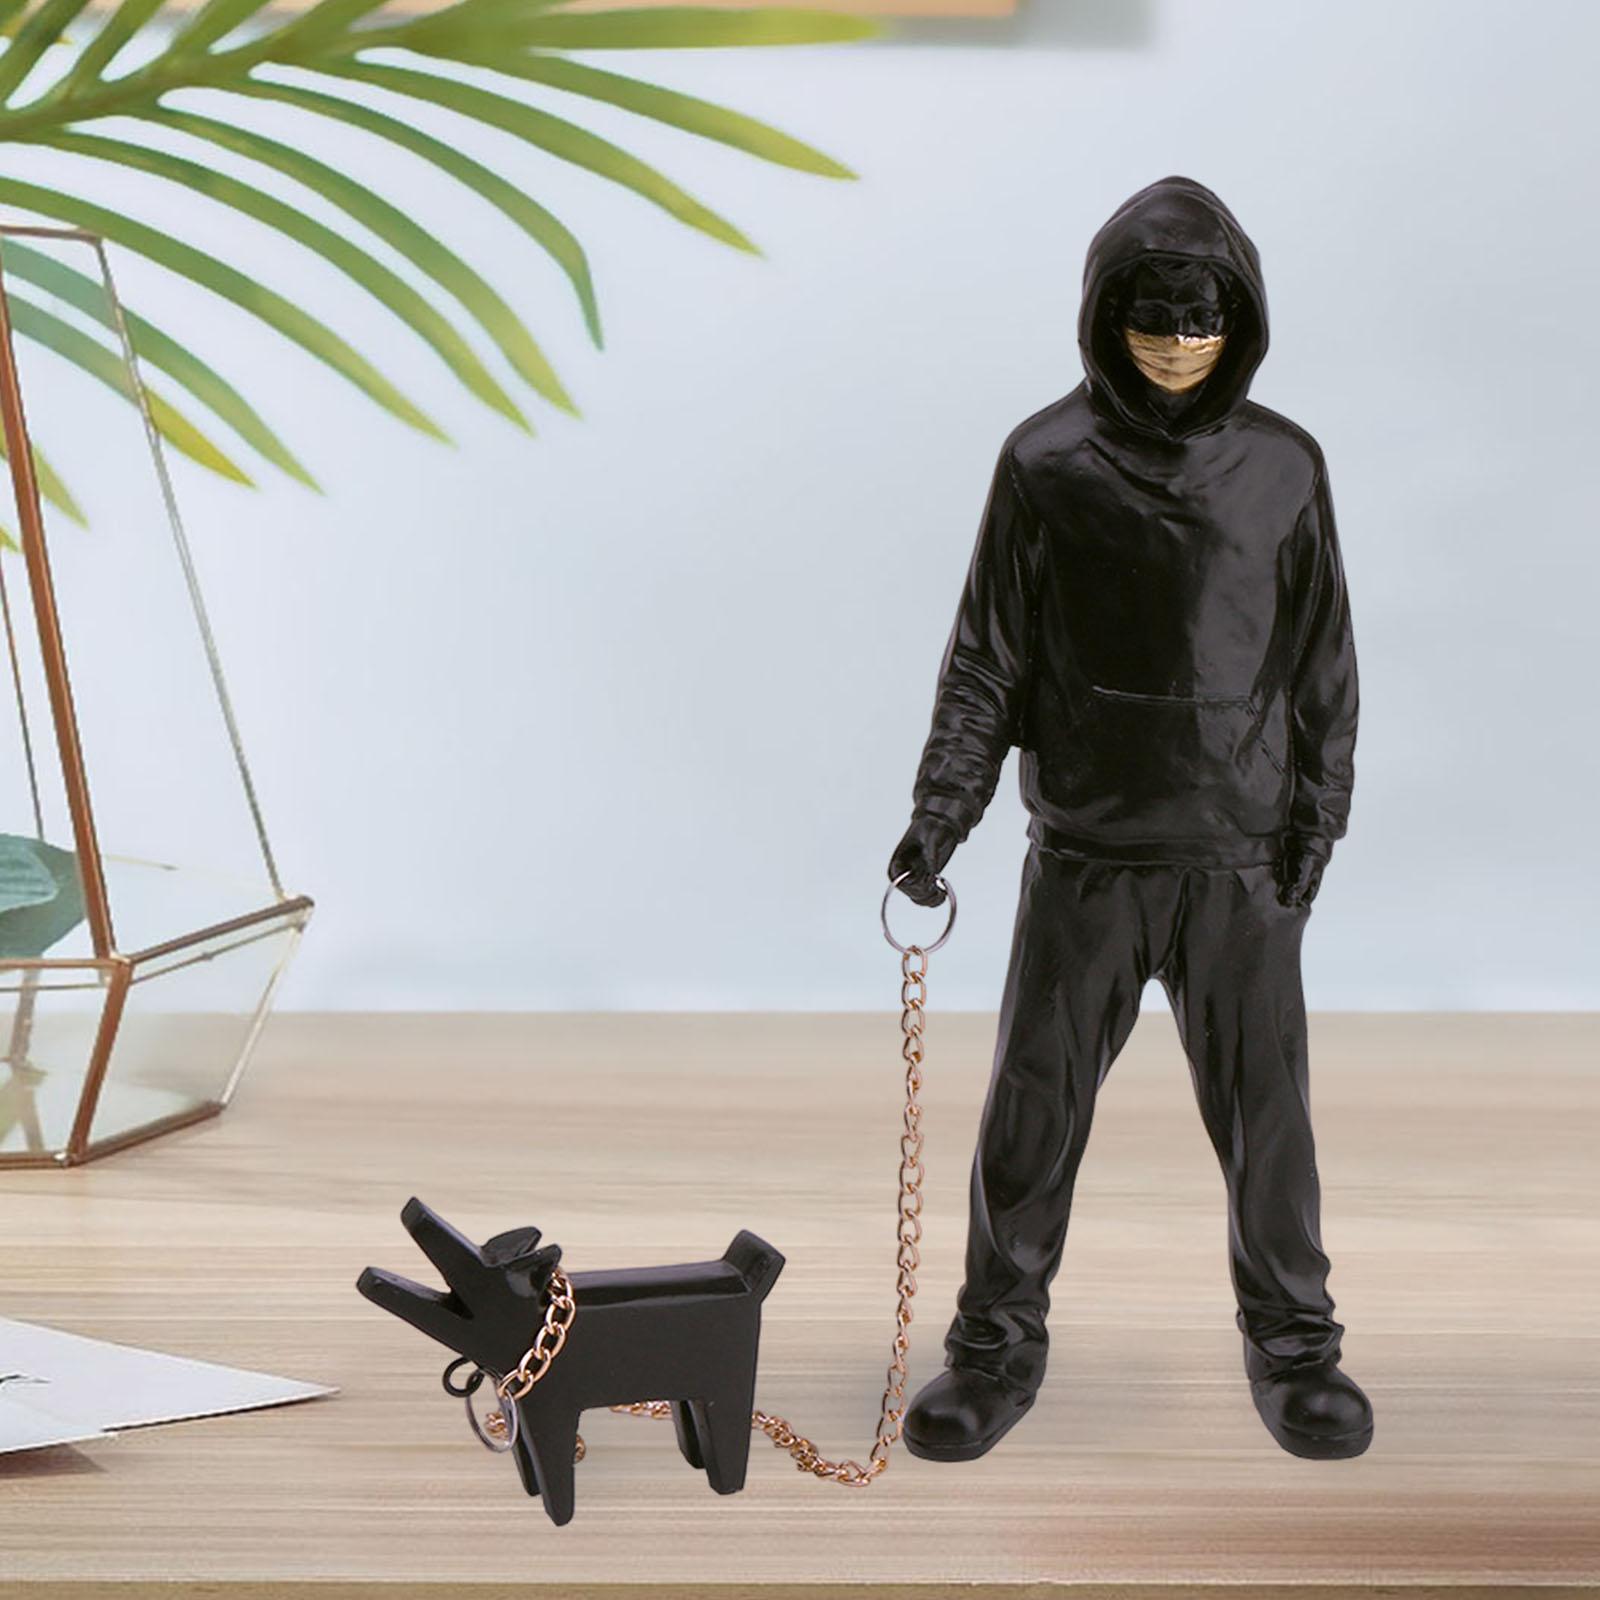 Dog Walker Statue Abstract Human Sculpture Housewarming Dorm Resin Figurines Black